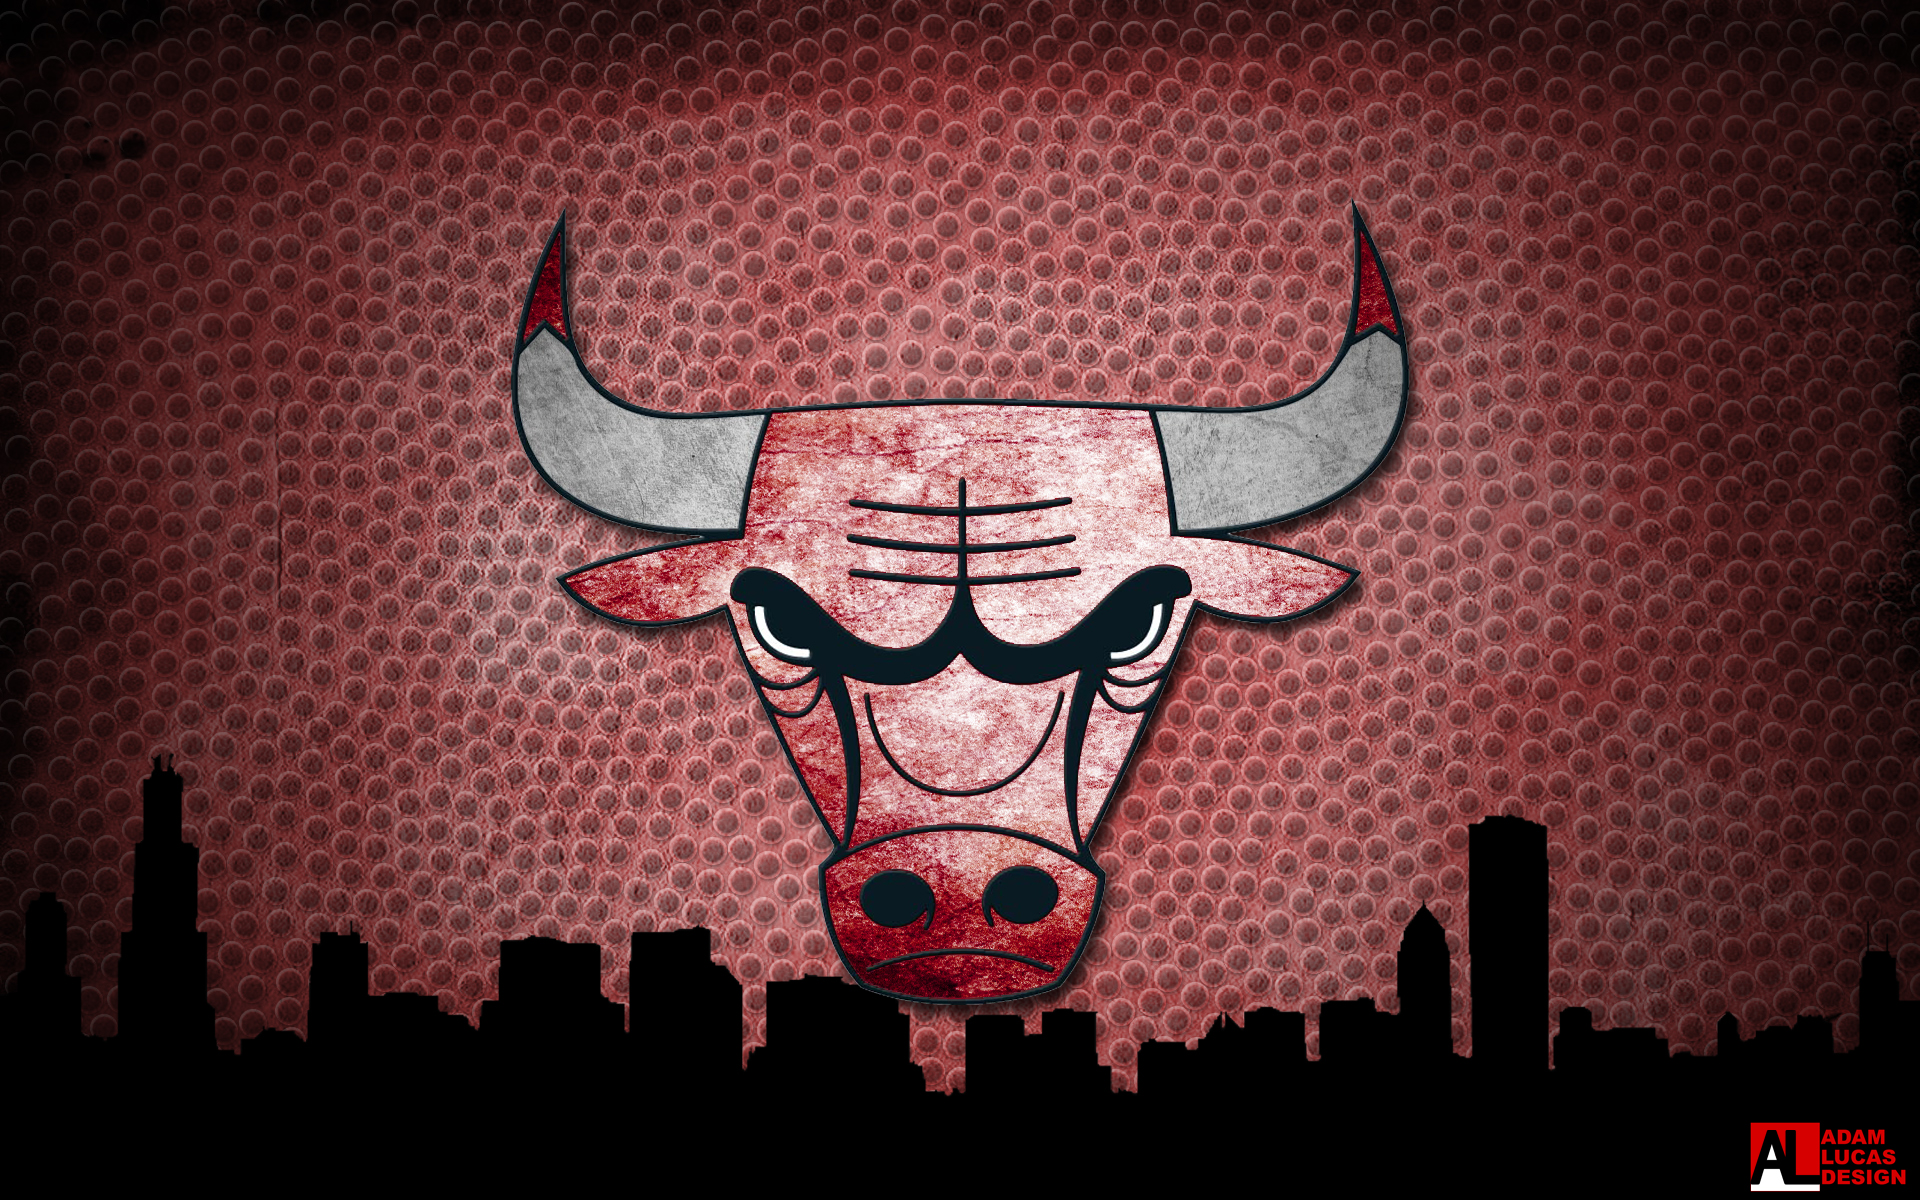 47 Chicago Bulls Iphone Wallpaper On Wallpapersafari